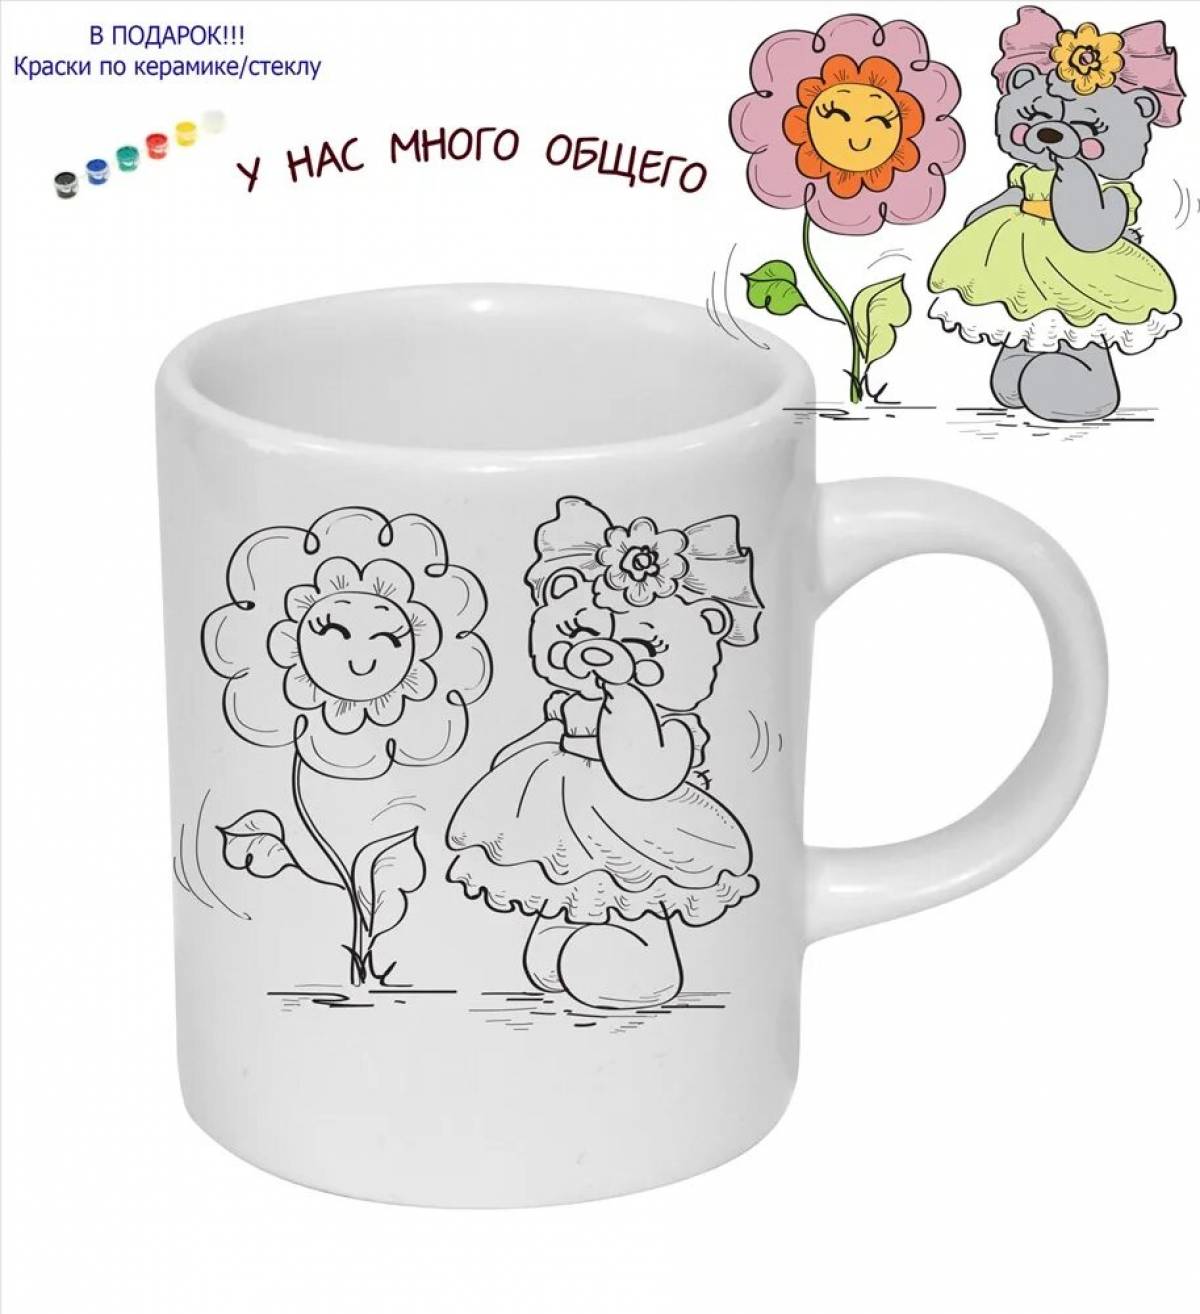 Colouring page enchanting mug for students